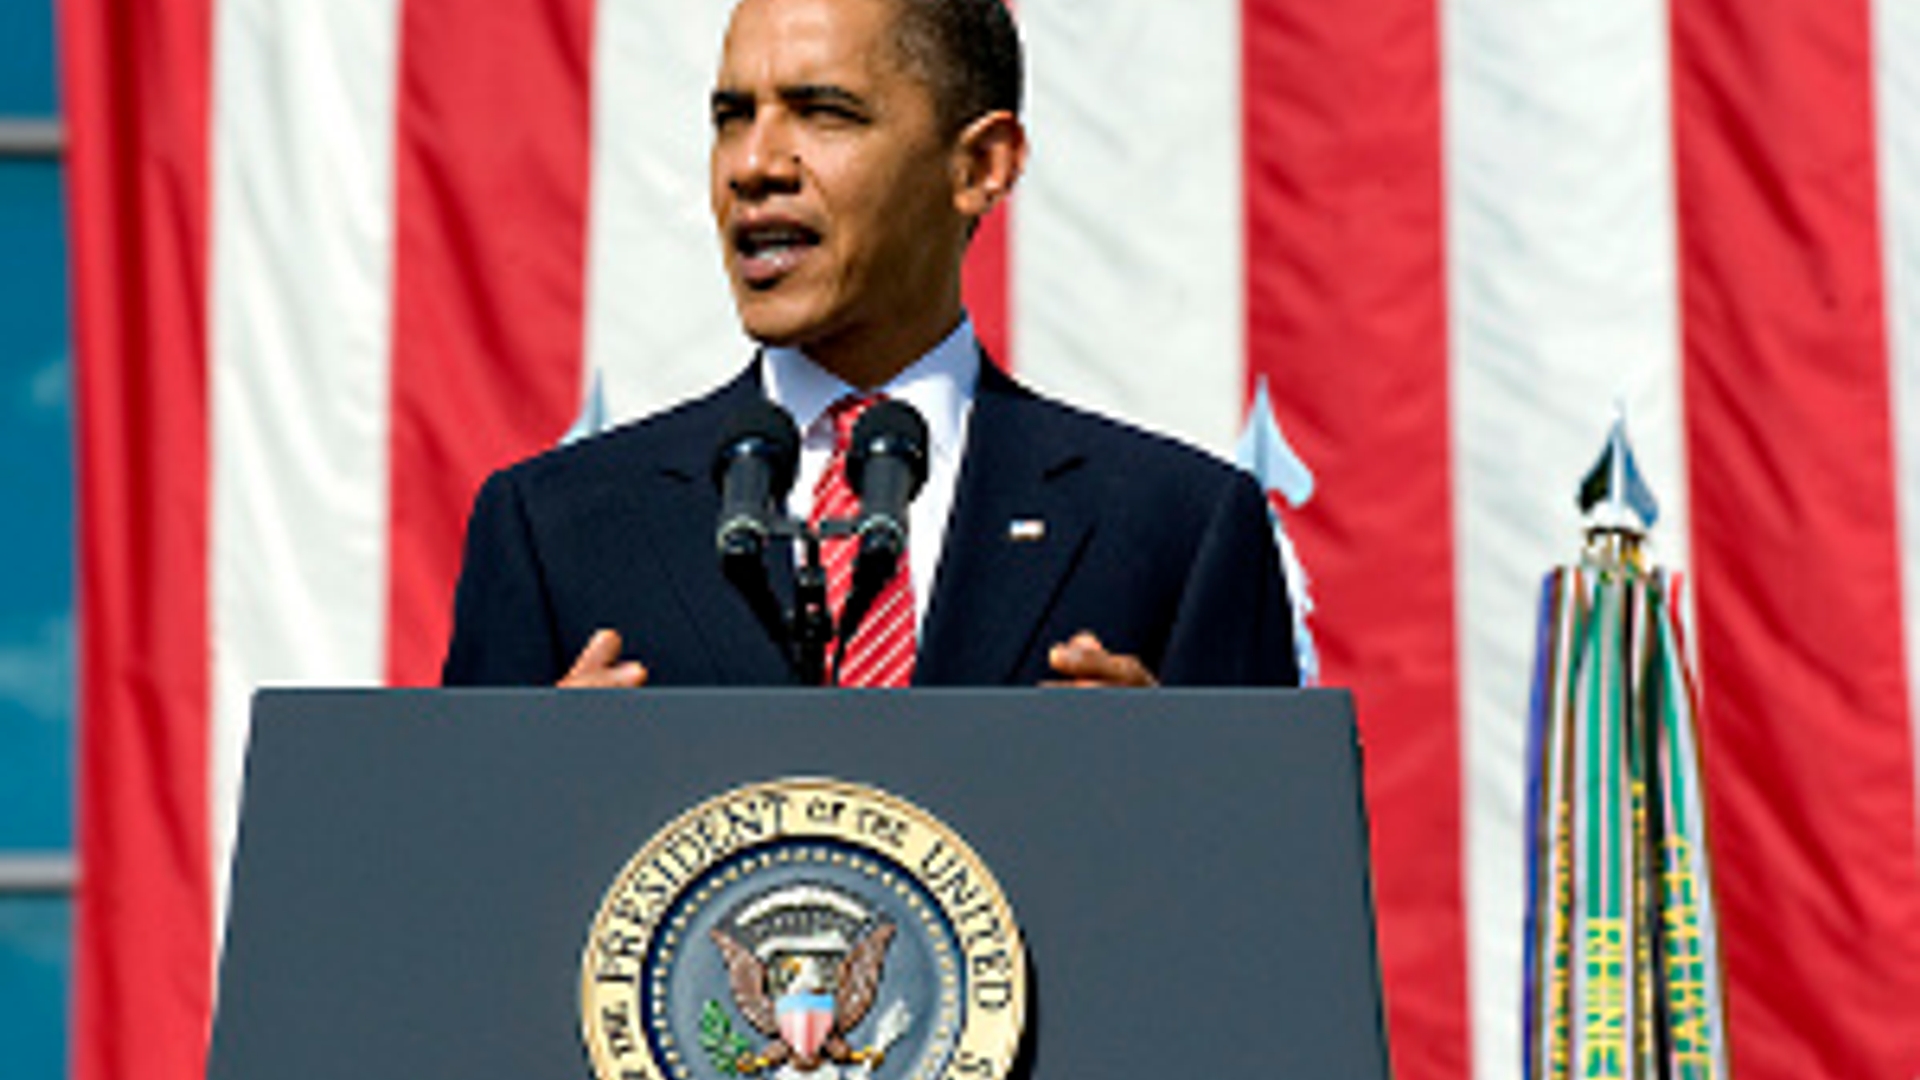 barack-obama-speech-300px.jpg